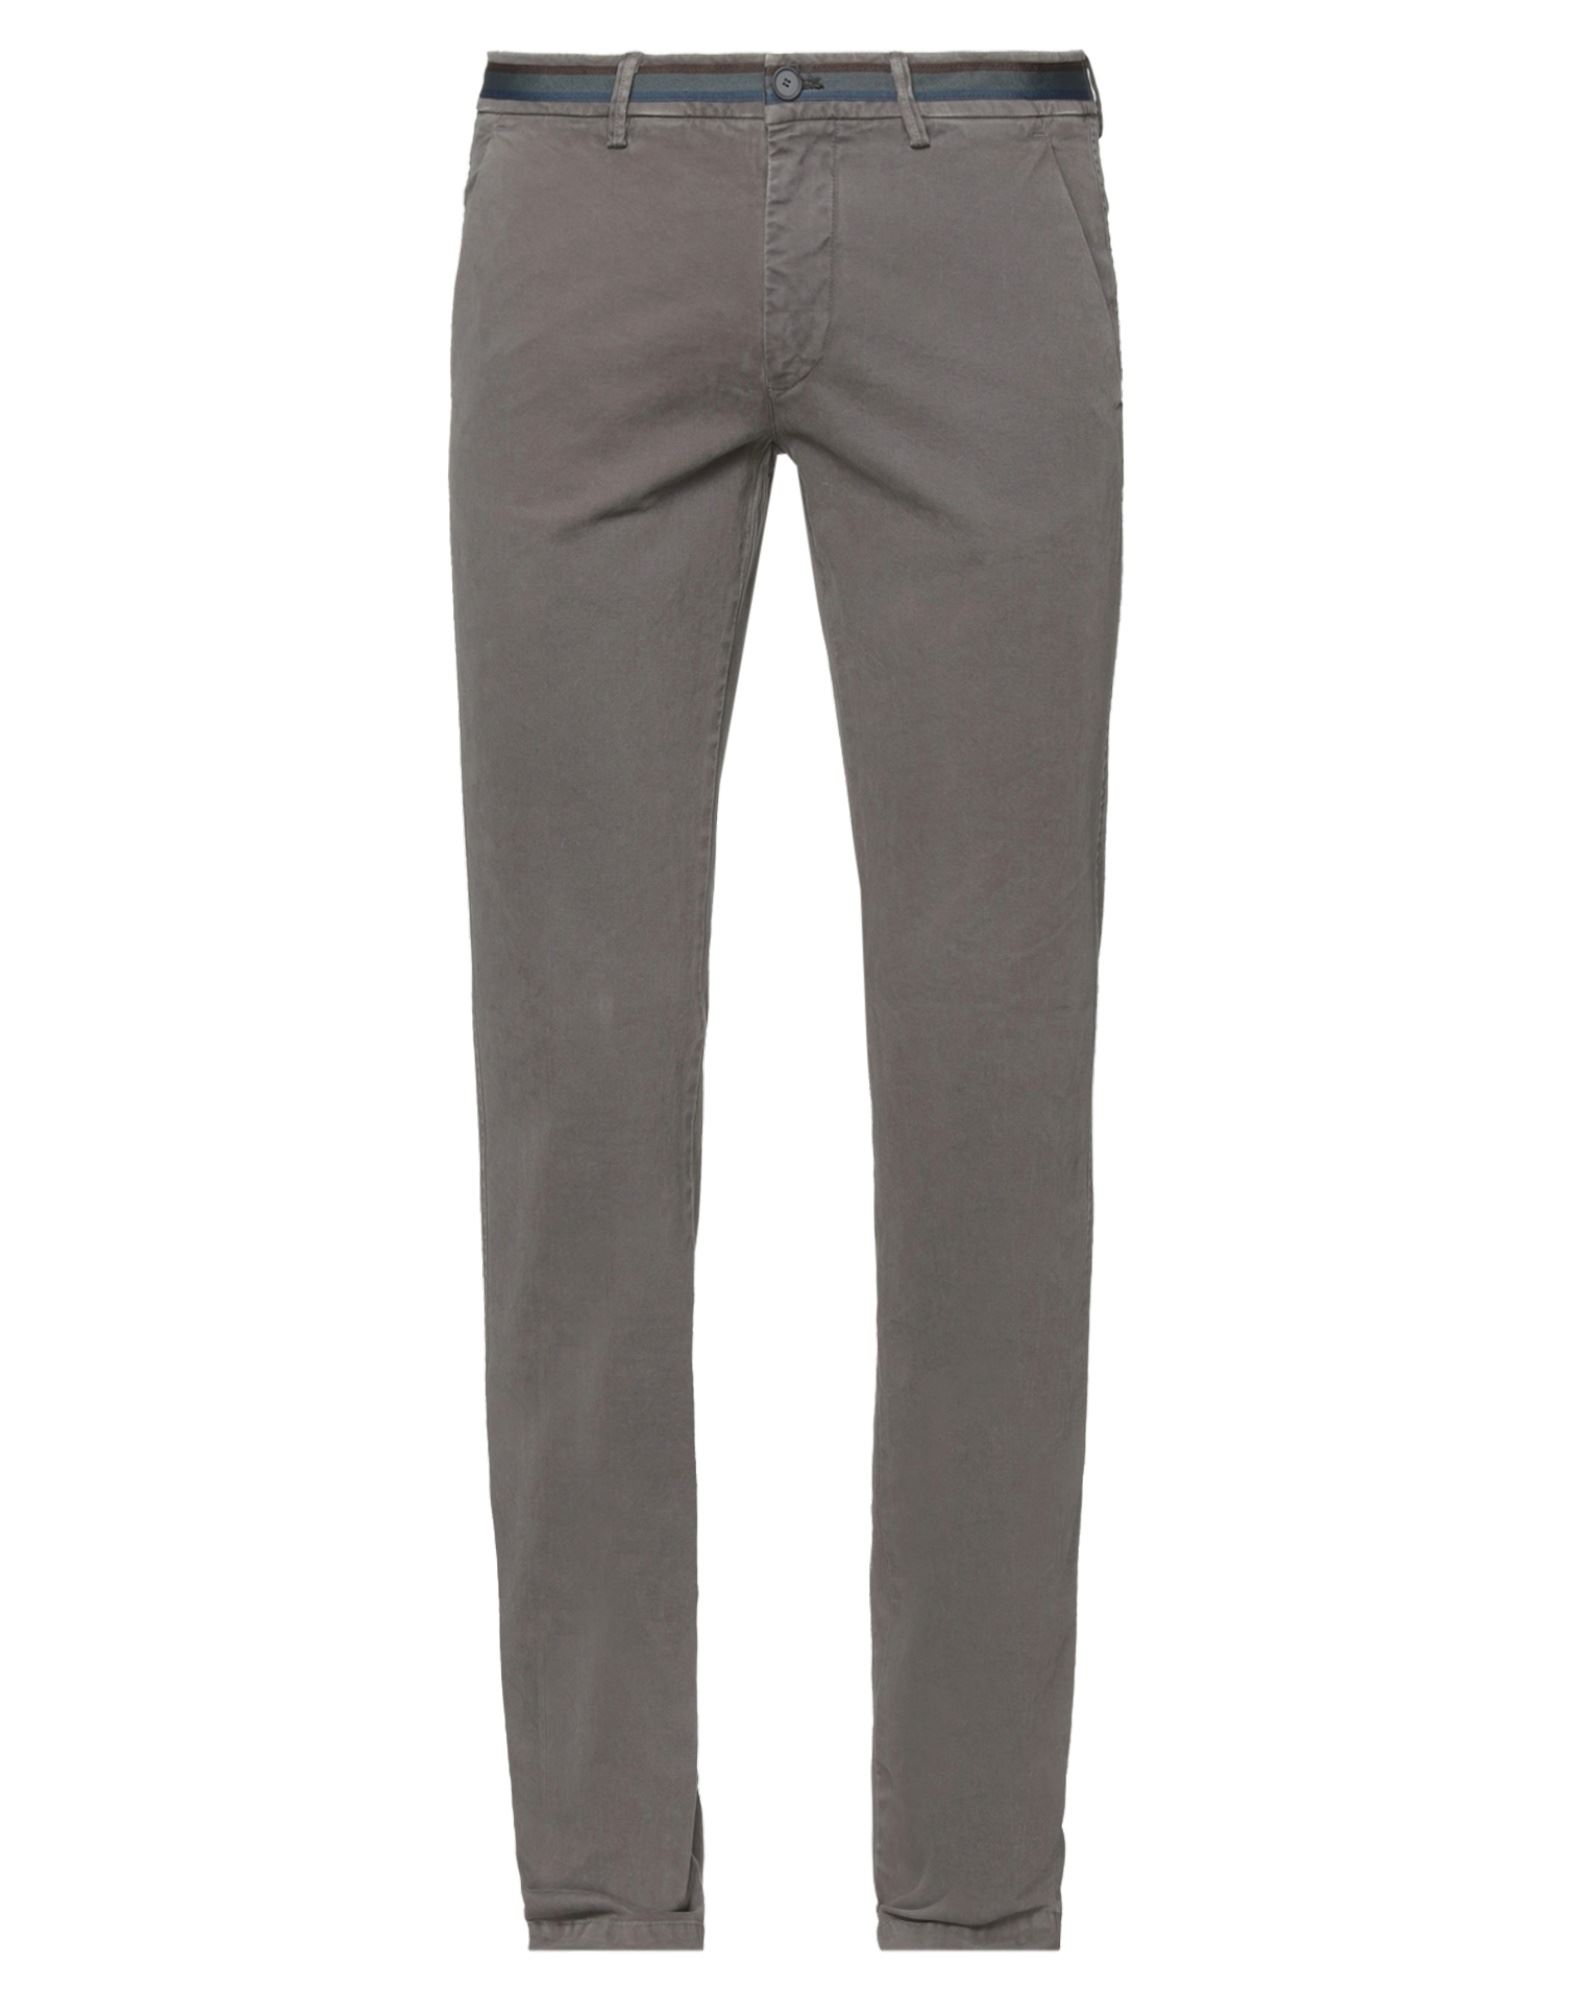 Em's Of Mason's Pants In Grey